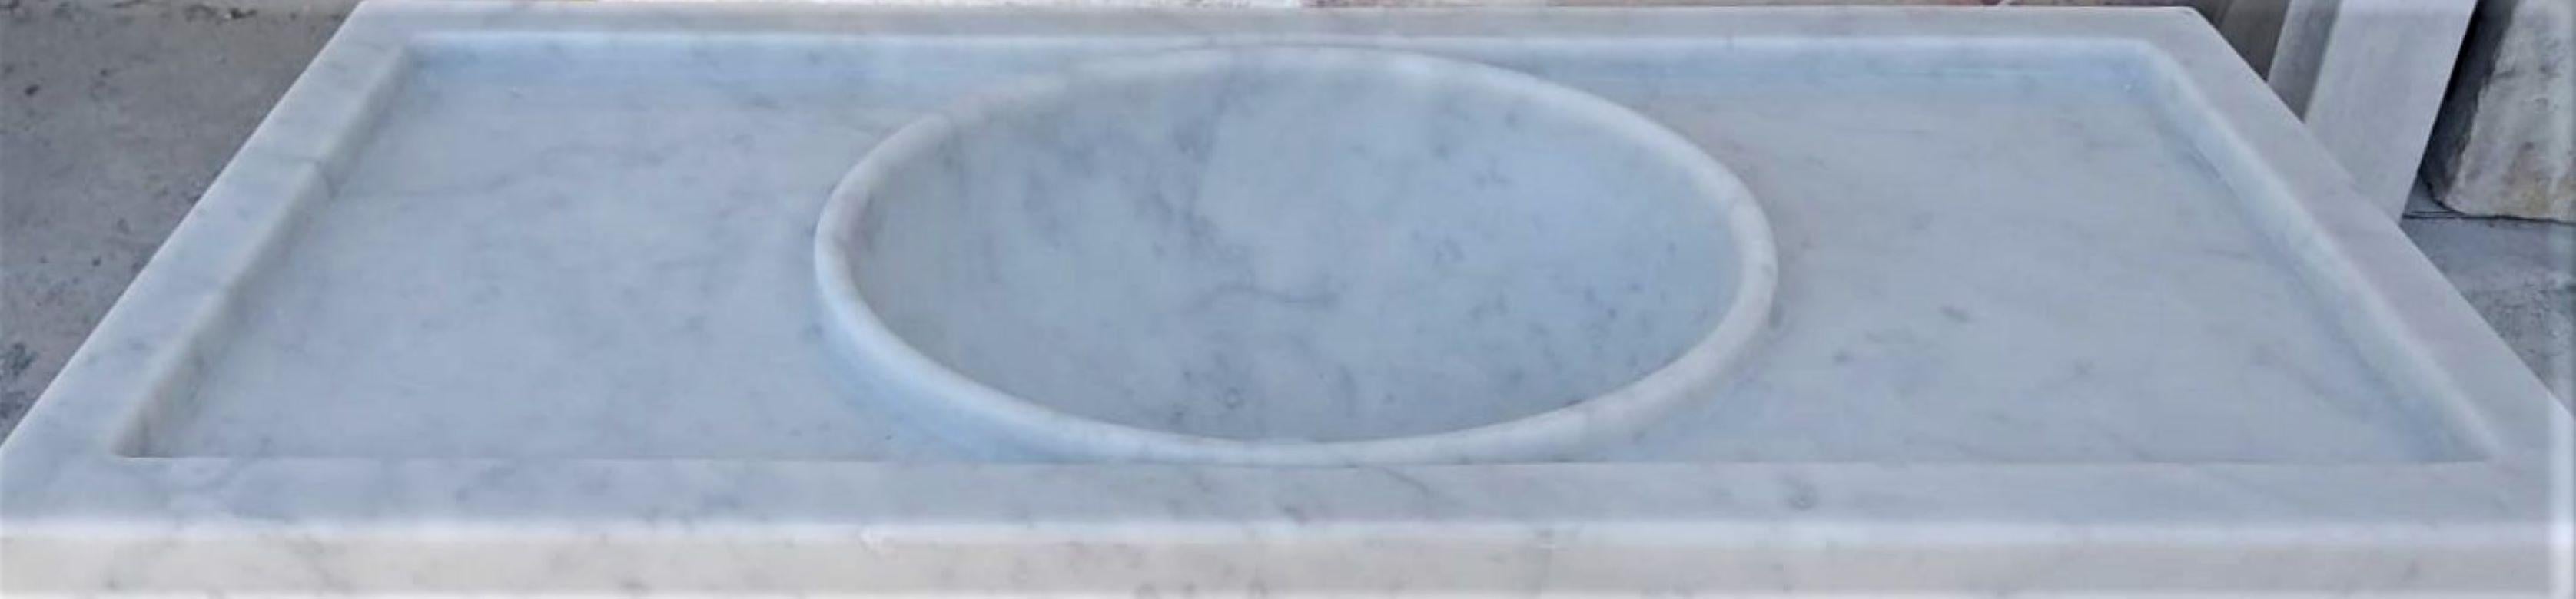 Italian Classical Marble Stone Sink Basin